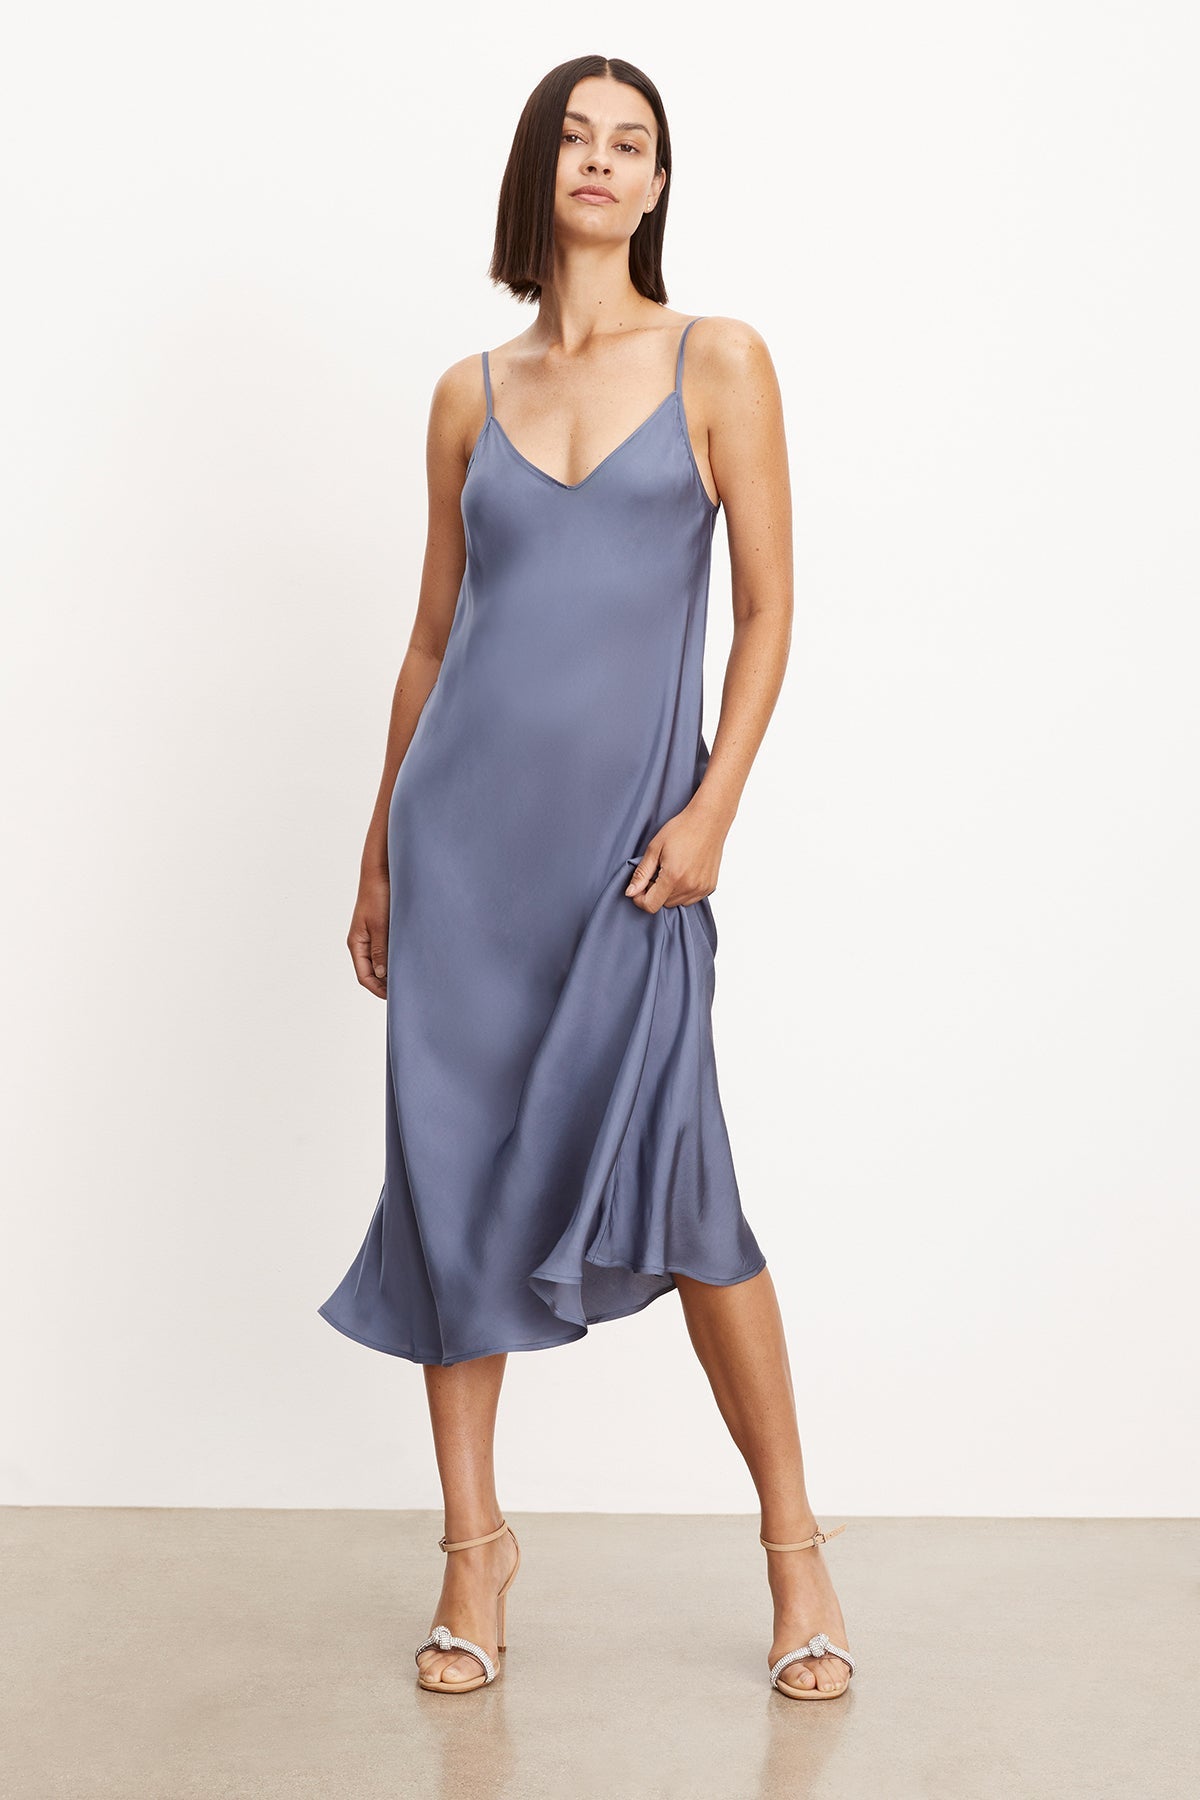 The model is wearing a blue Velvet by Graham & Spencer POPPY SATIN SLIP DRESS with adjustable straps, showcasing its versatility.-36001442070721